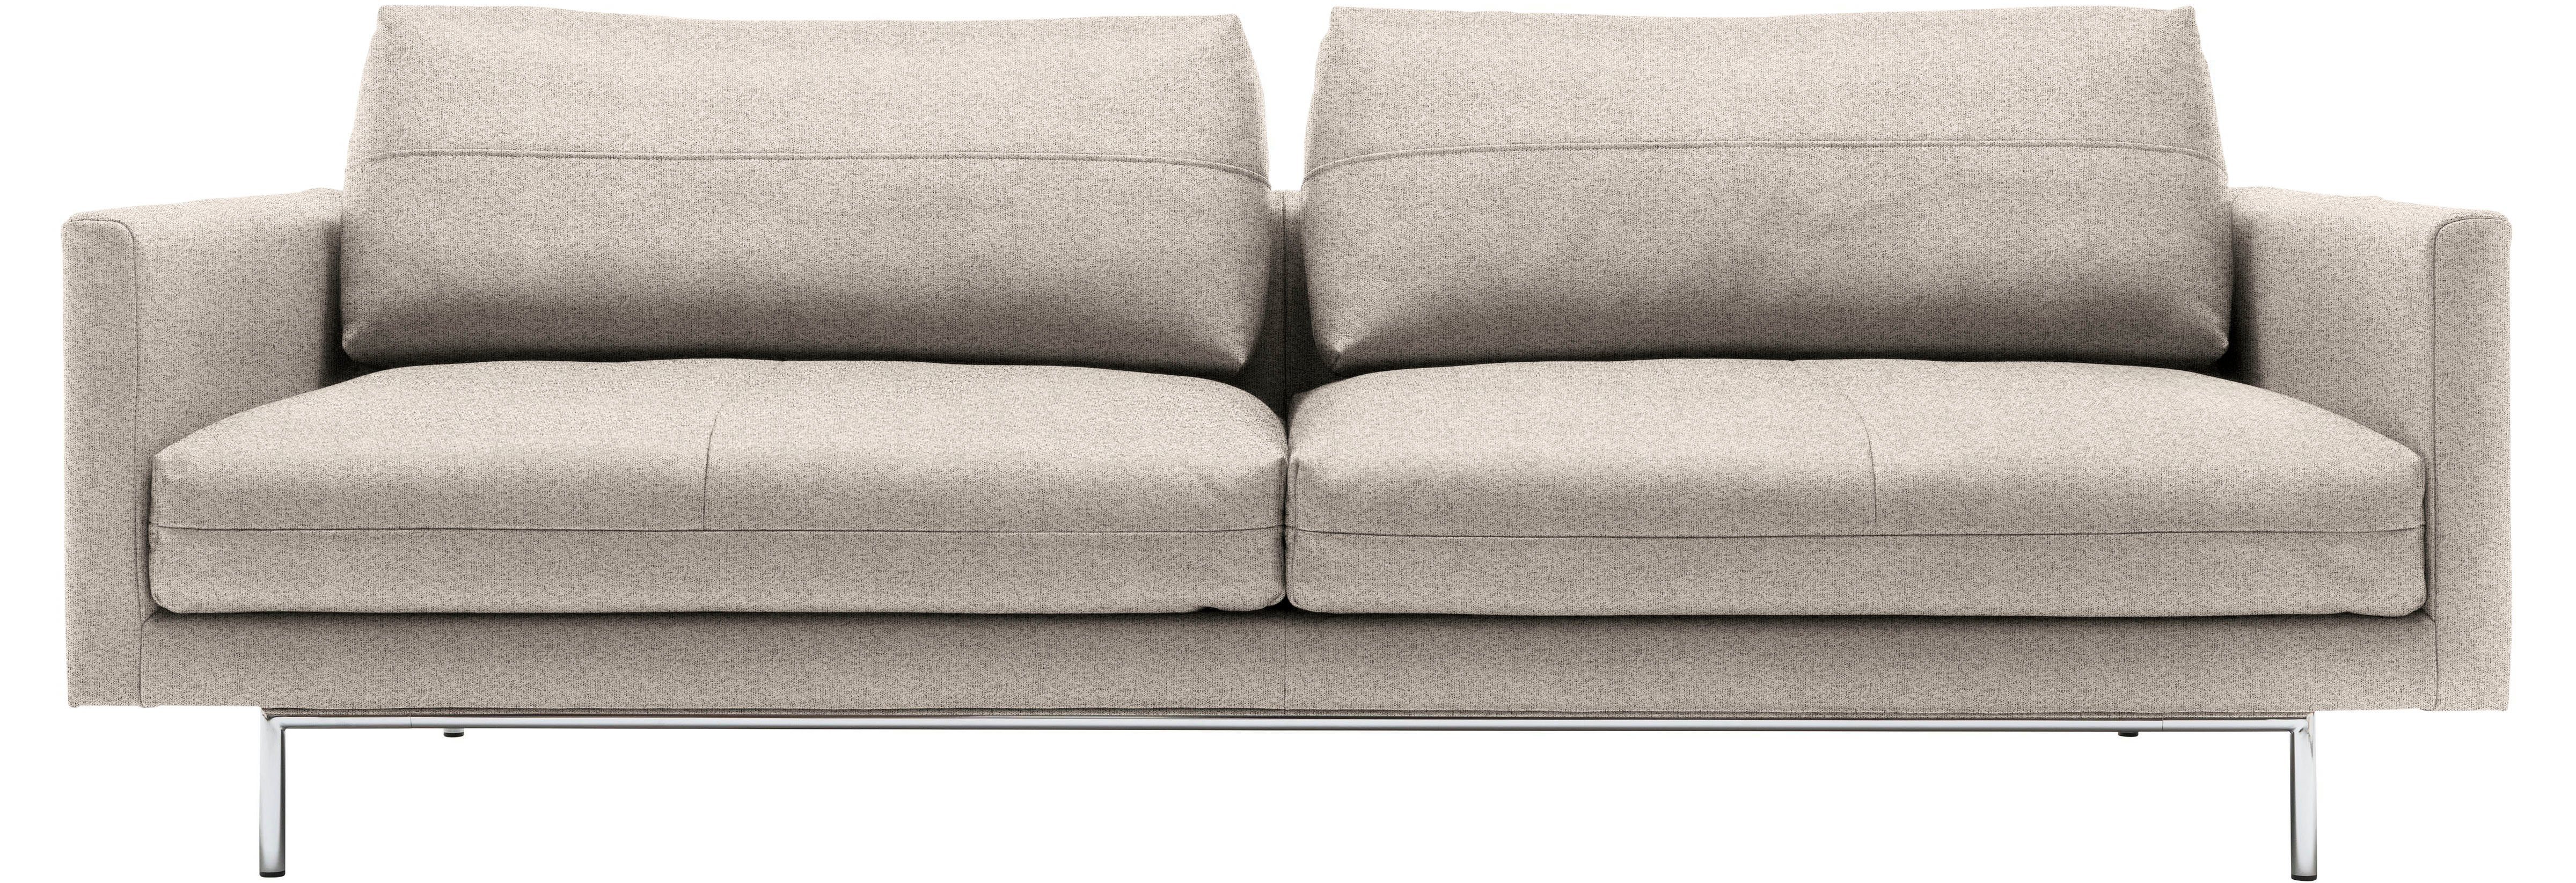 hülsta sofa 4-Sitzer grbeige-nat | graubeige /natur